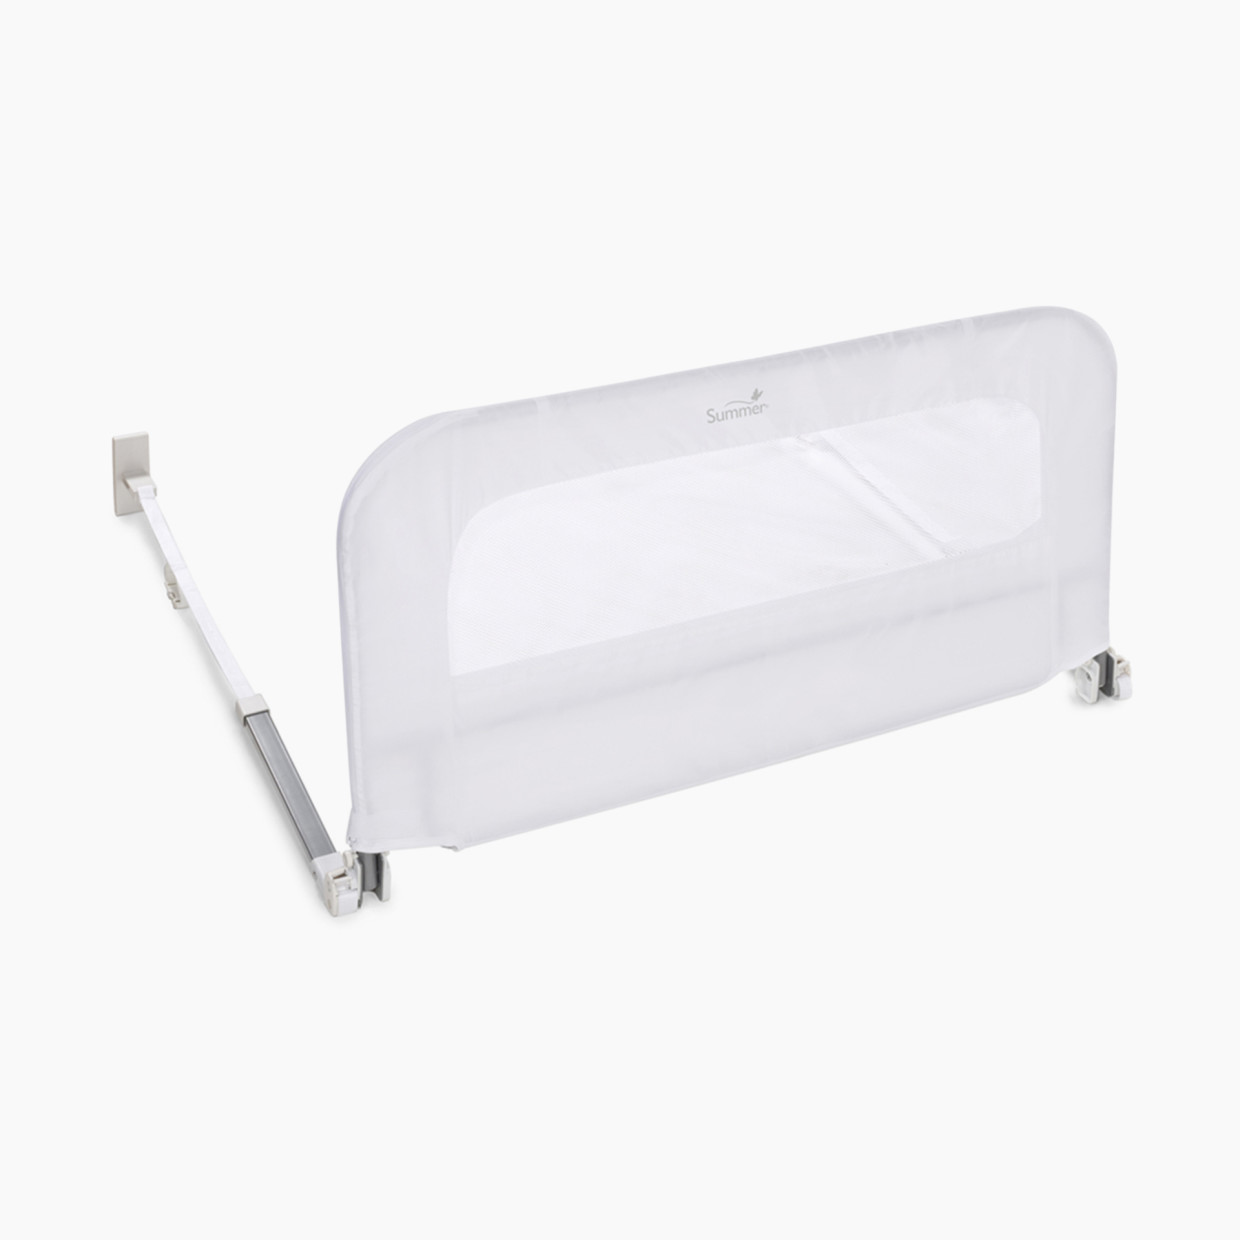 Summer Single Fold Safety Bedrail - White.